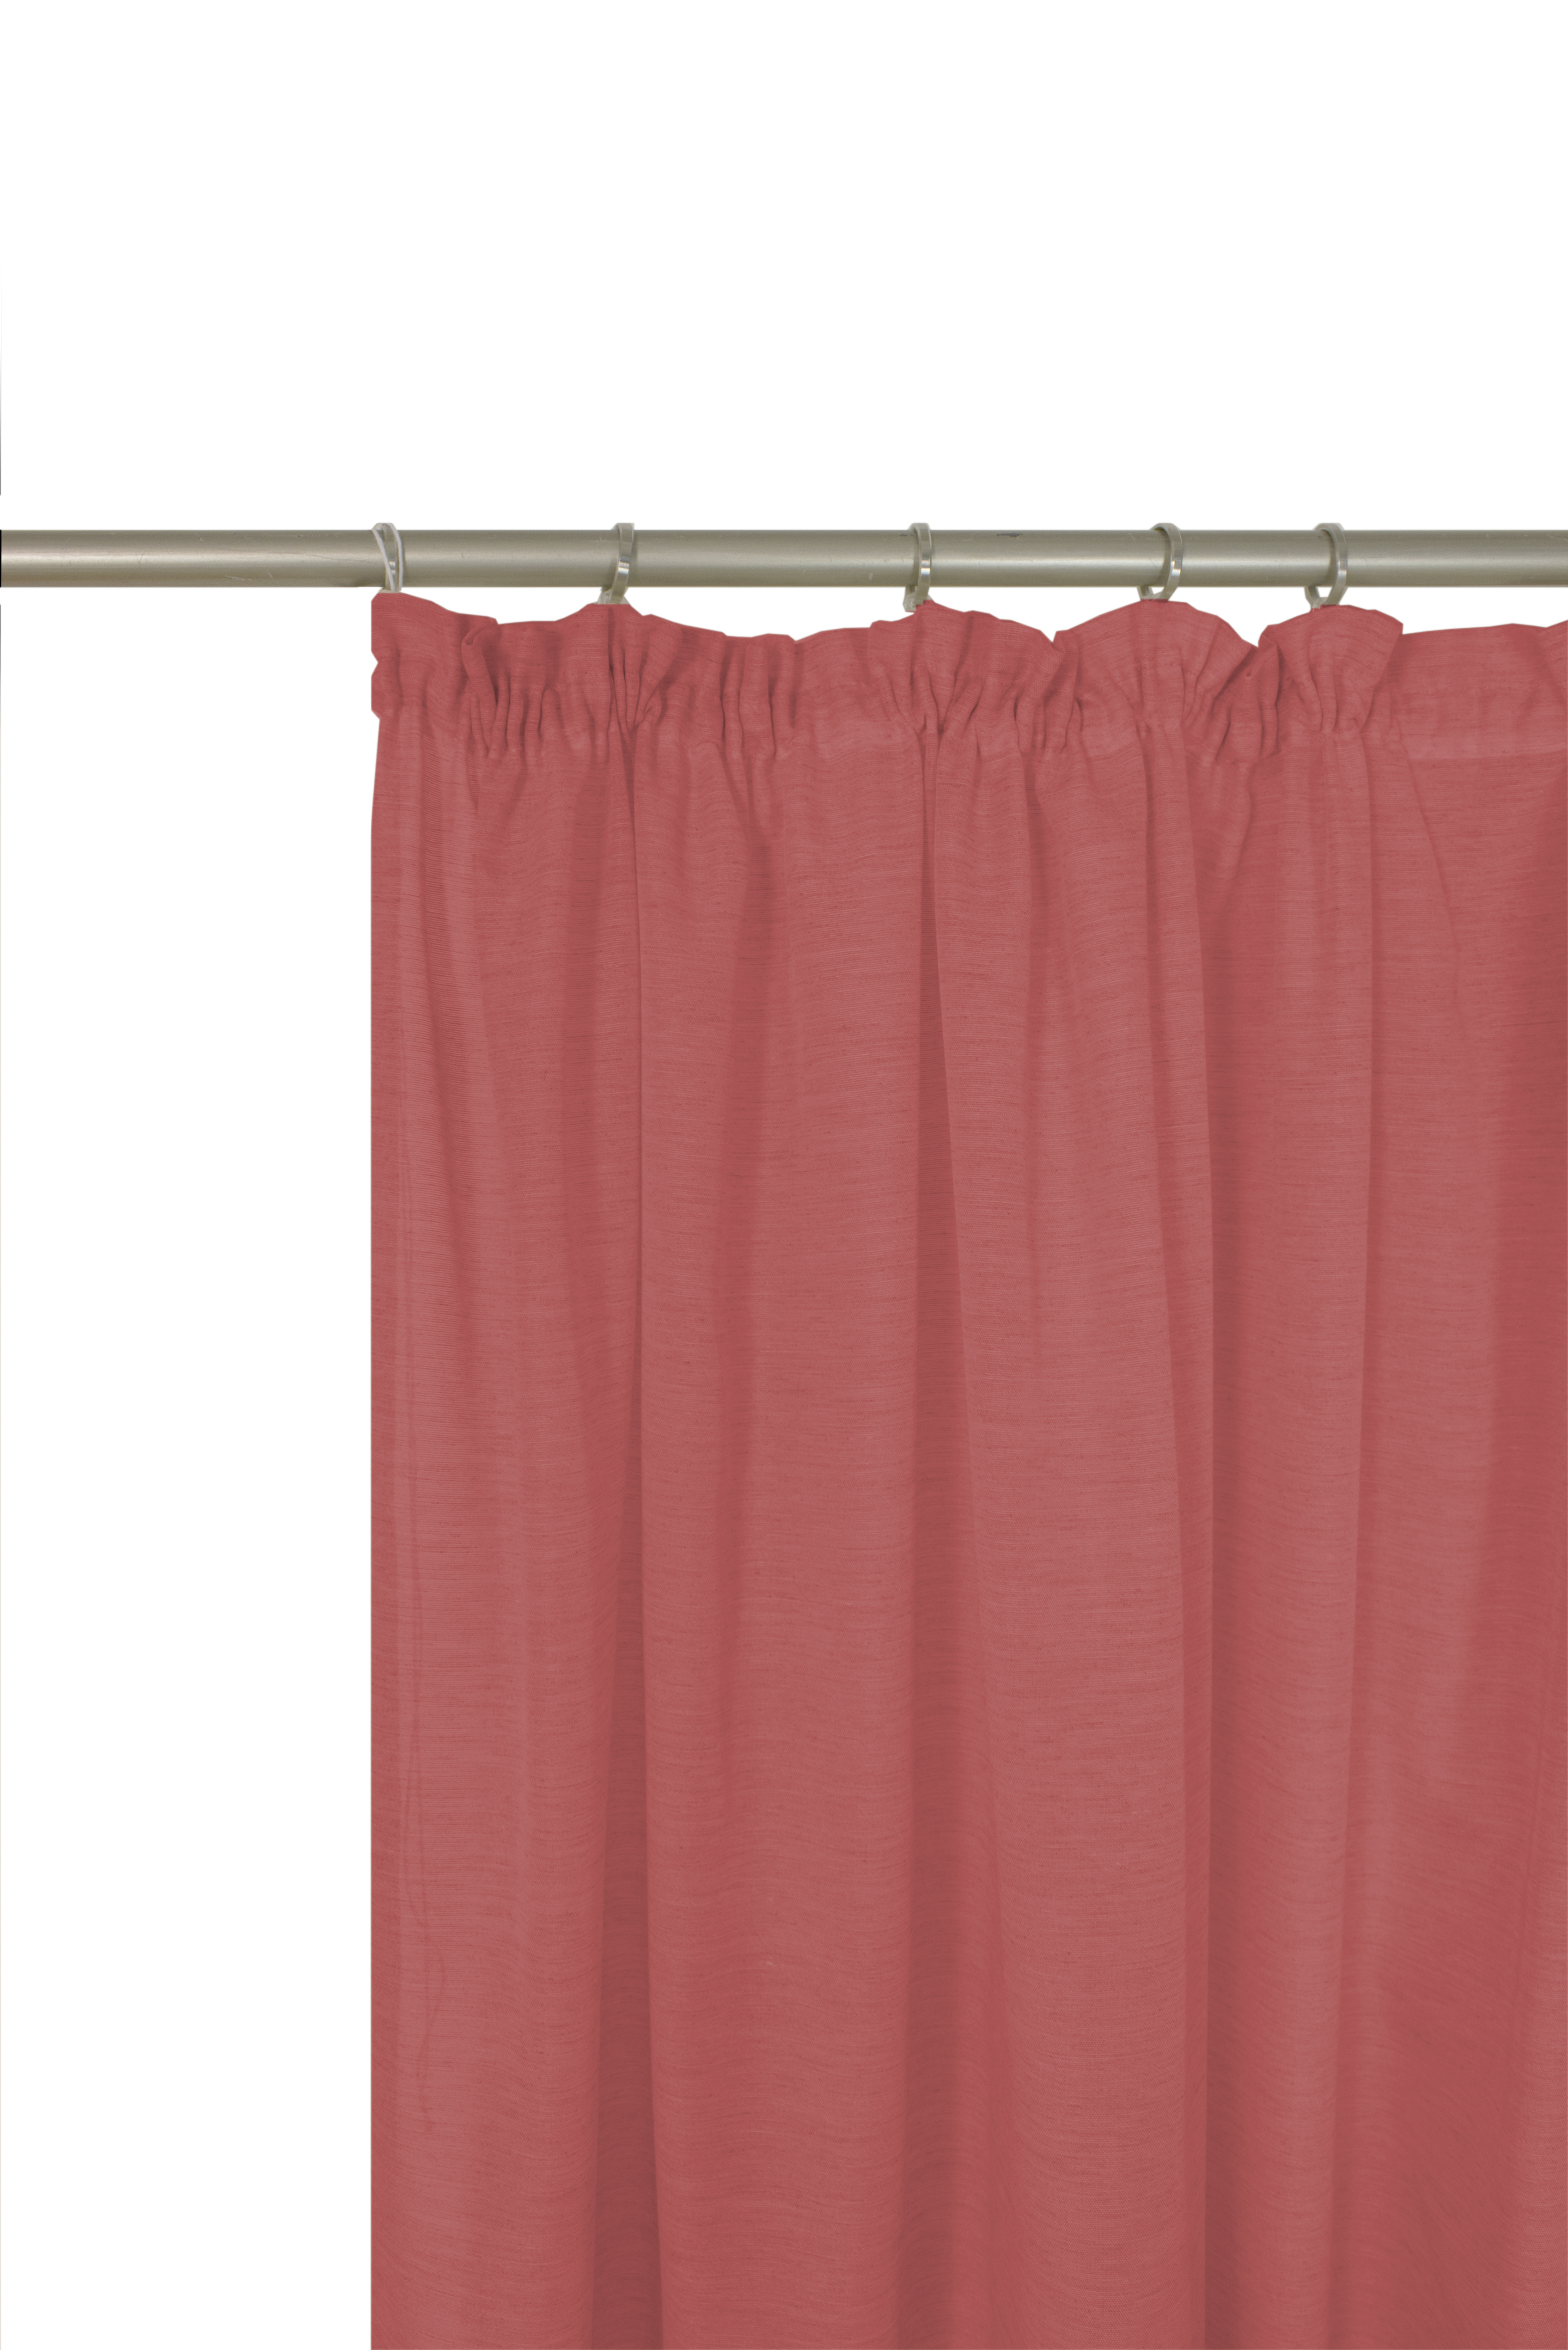 [Über 80 % Rabatt] Lorca (Vorhang) - Farbe: Aufmachung: Größe: 142 Kräuselband | | Rot x cm 245